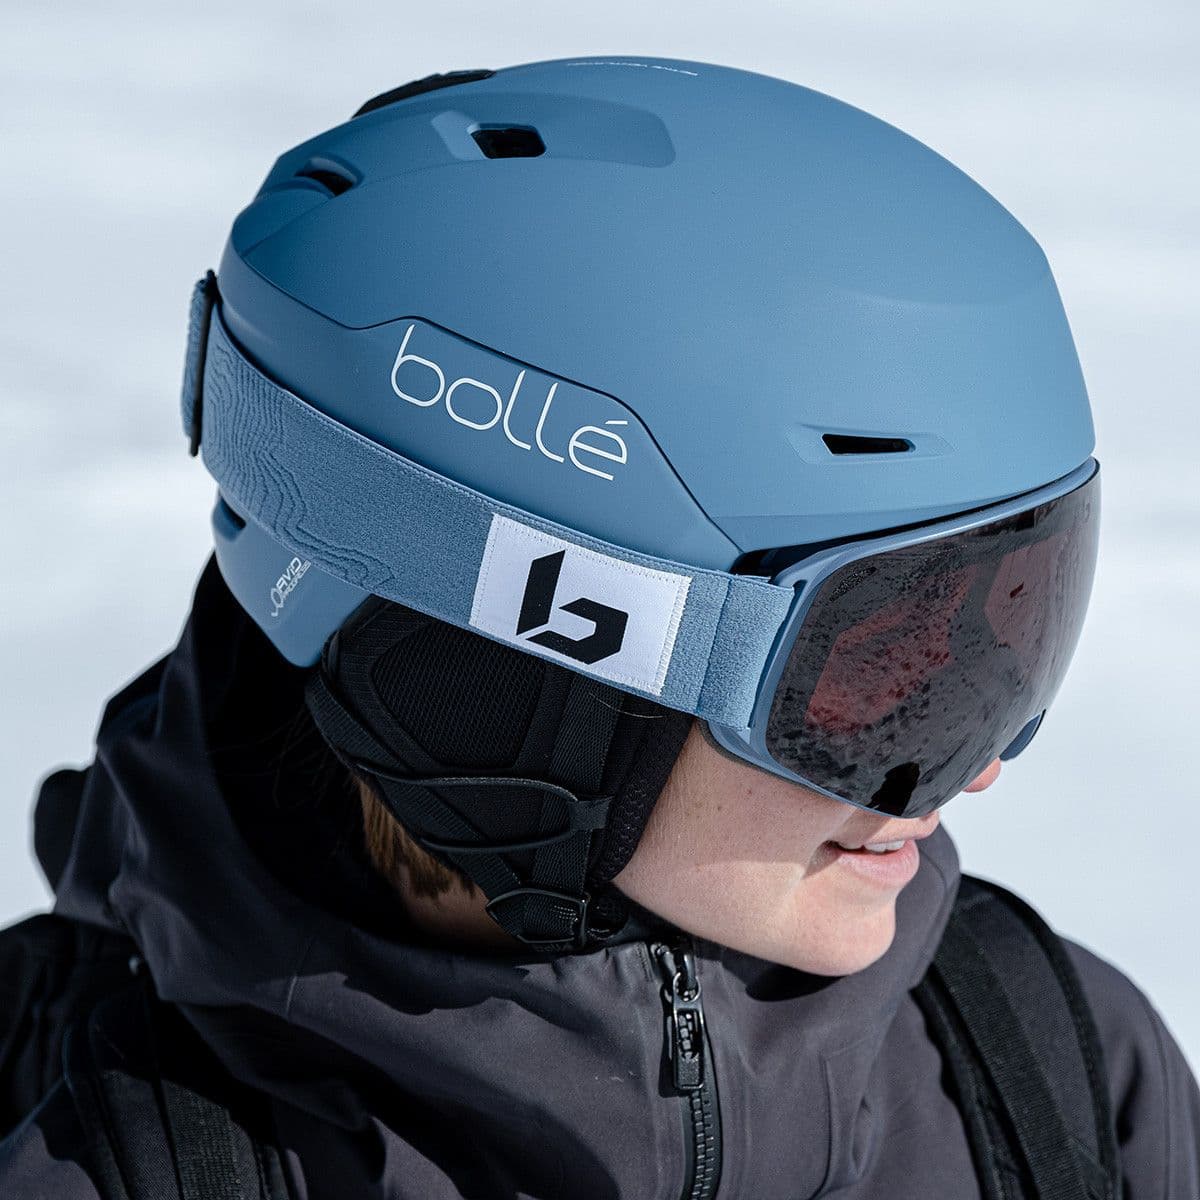 Bolle Eco Torus Snow Goggles